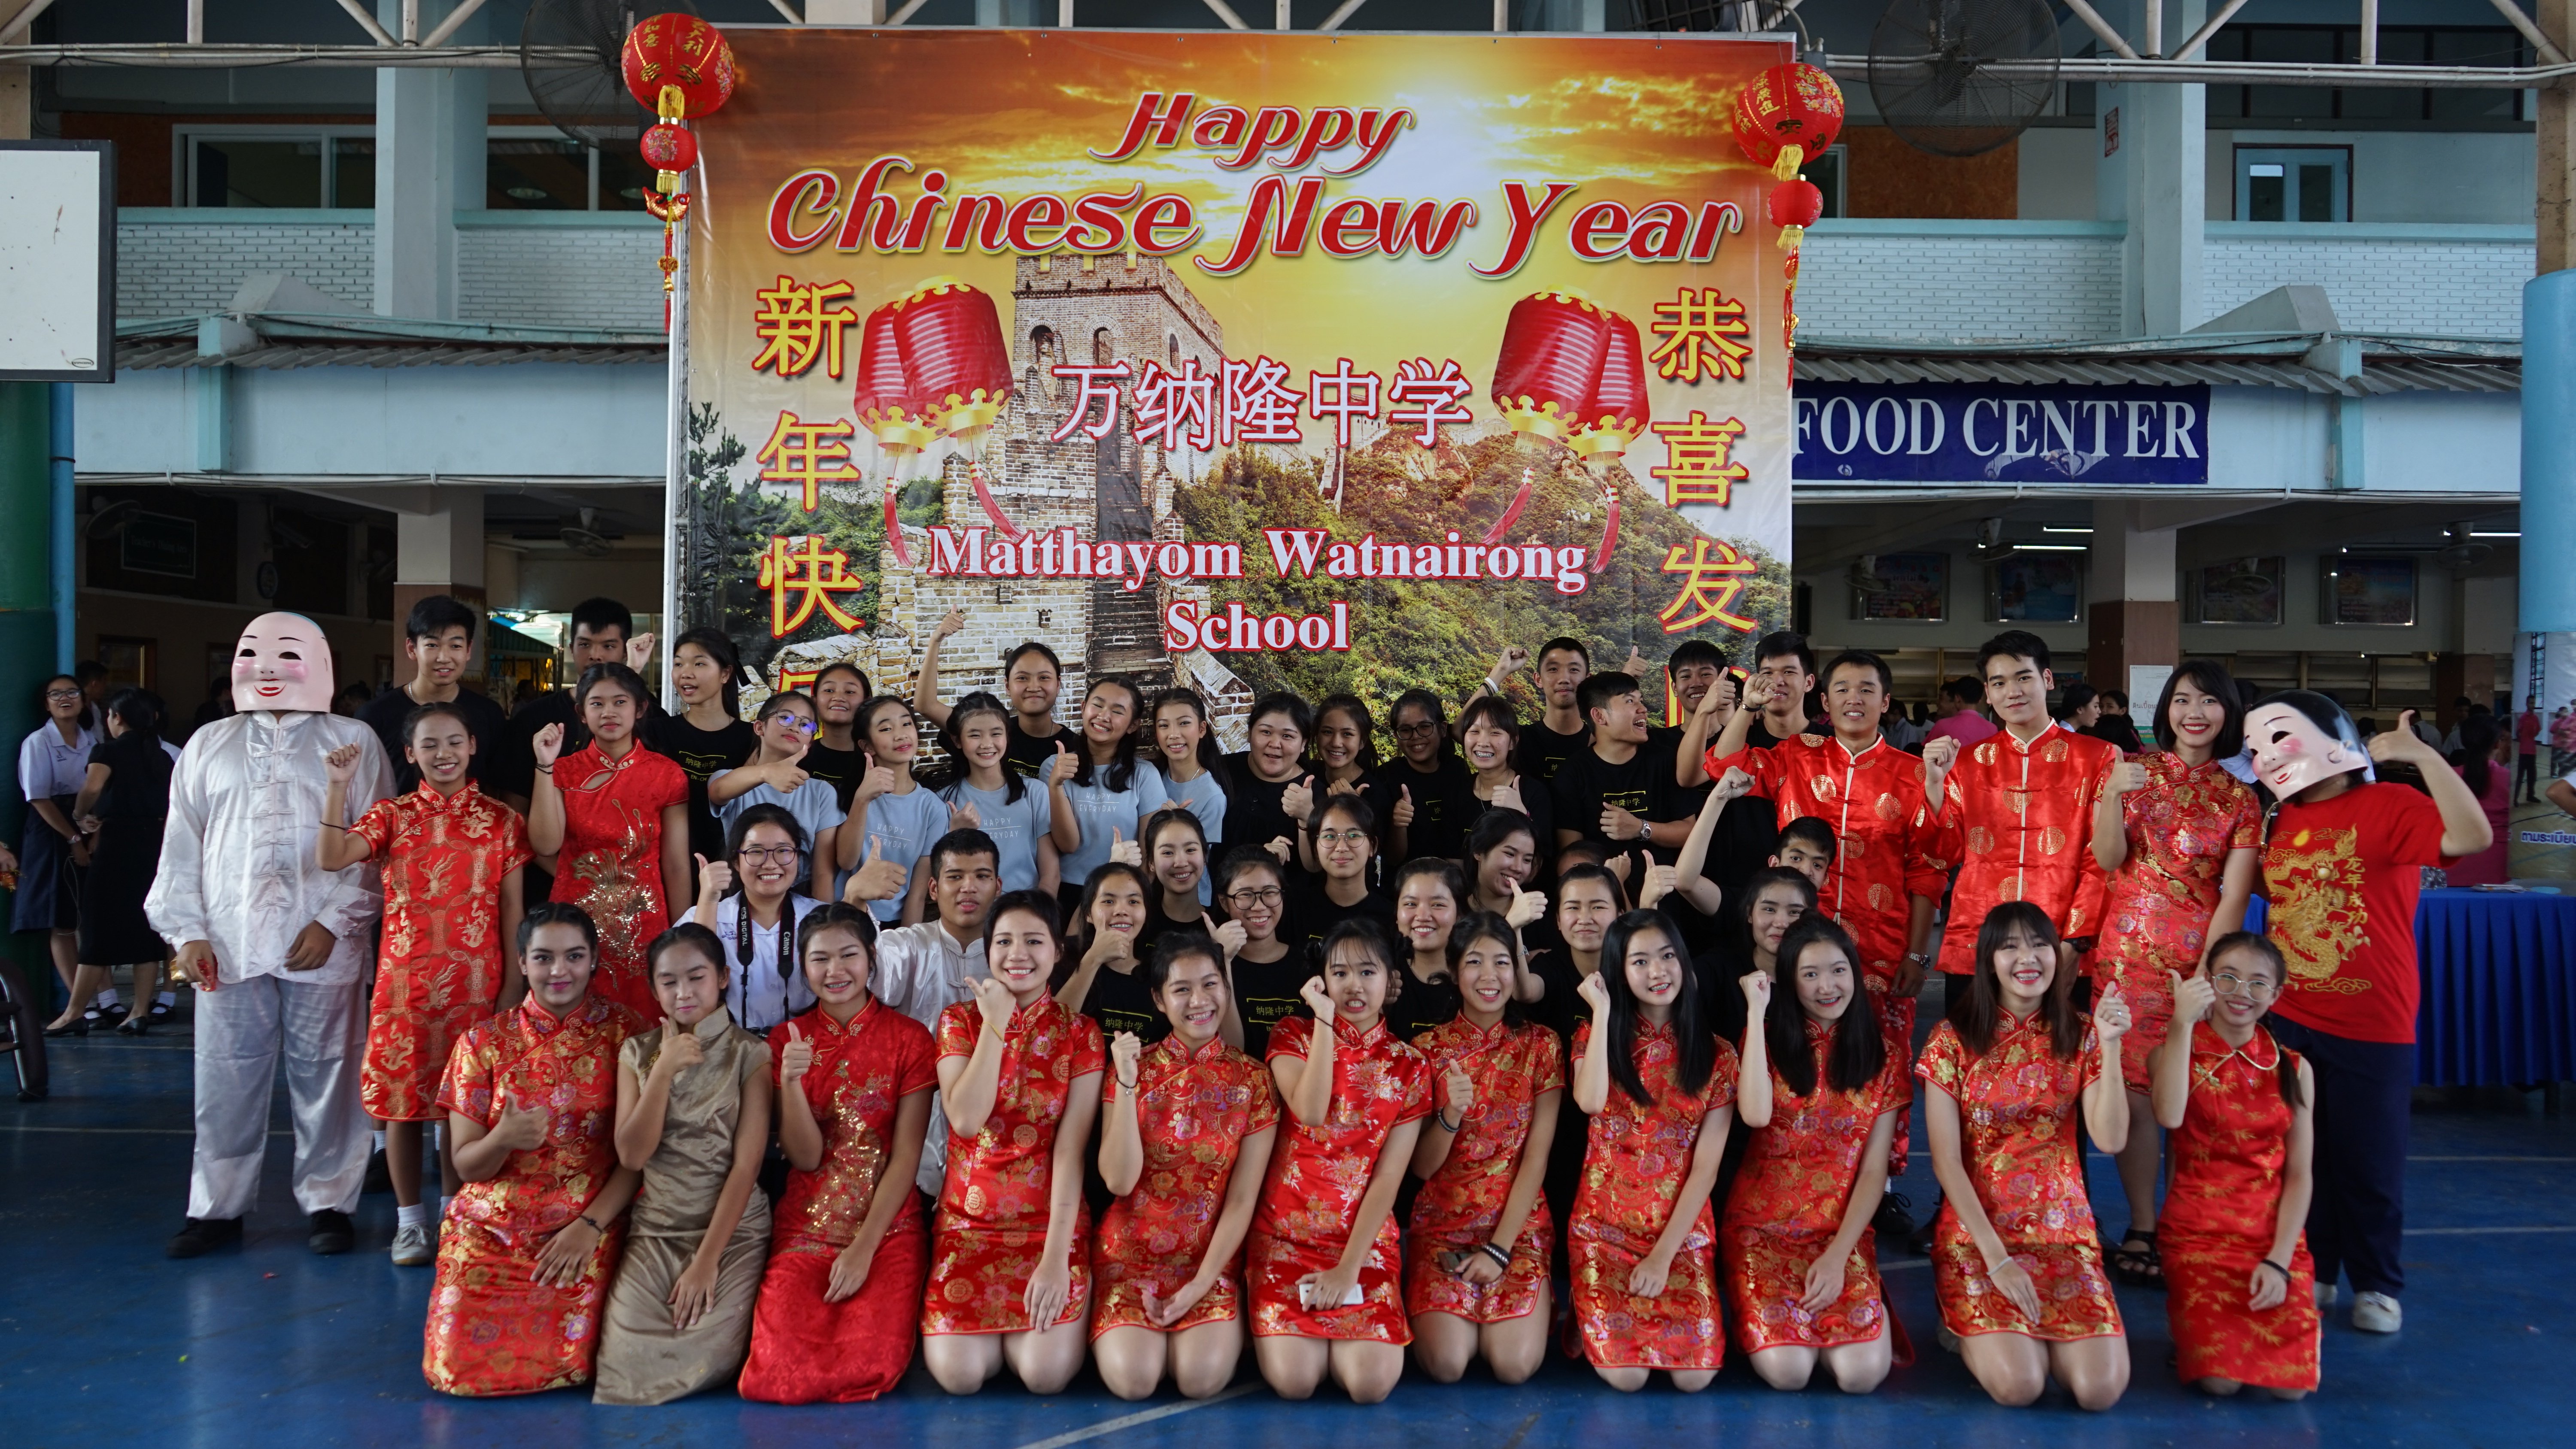 Chinese Day 2017 at Matthayom Watnairong School on January 27, 2017.﻿